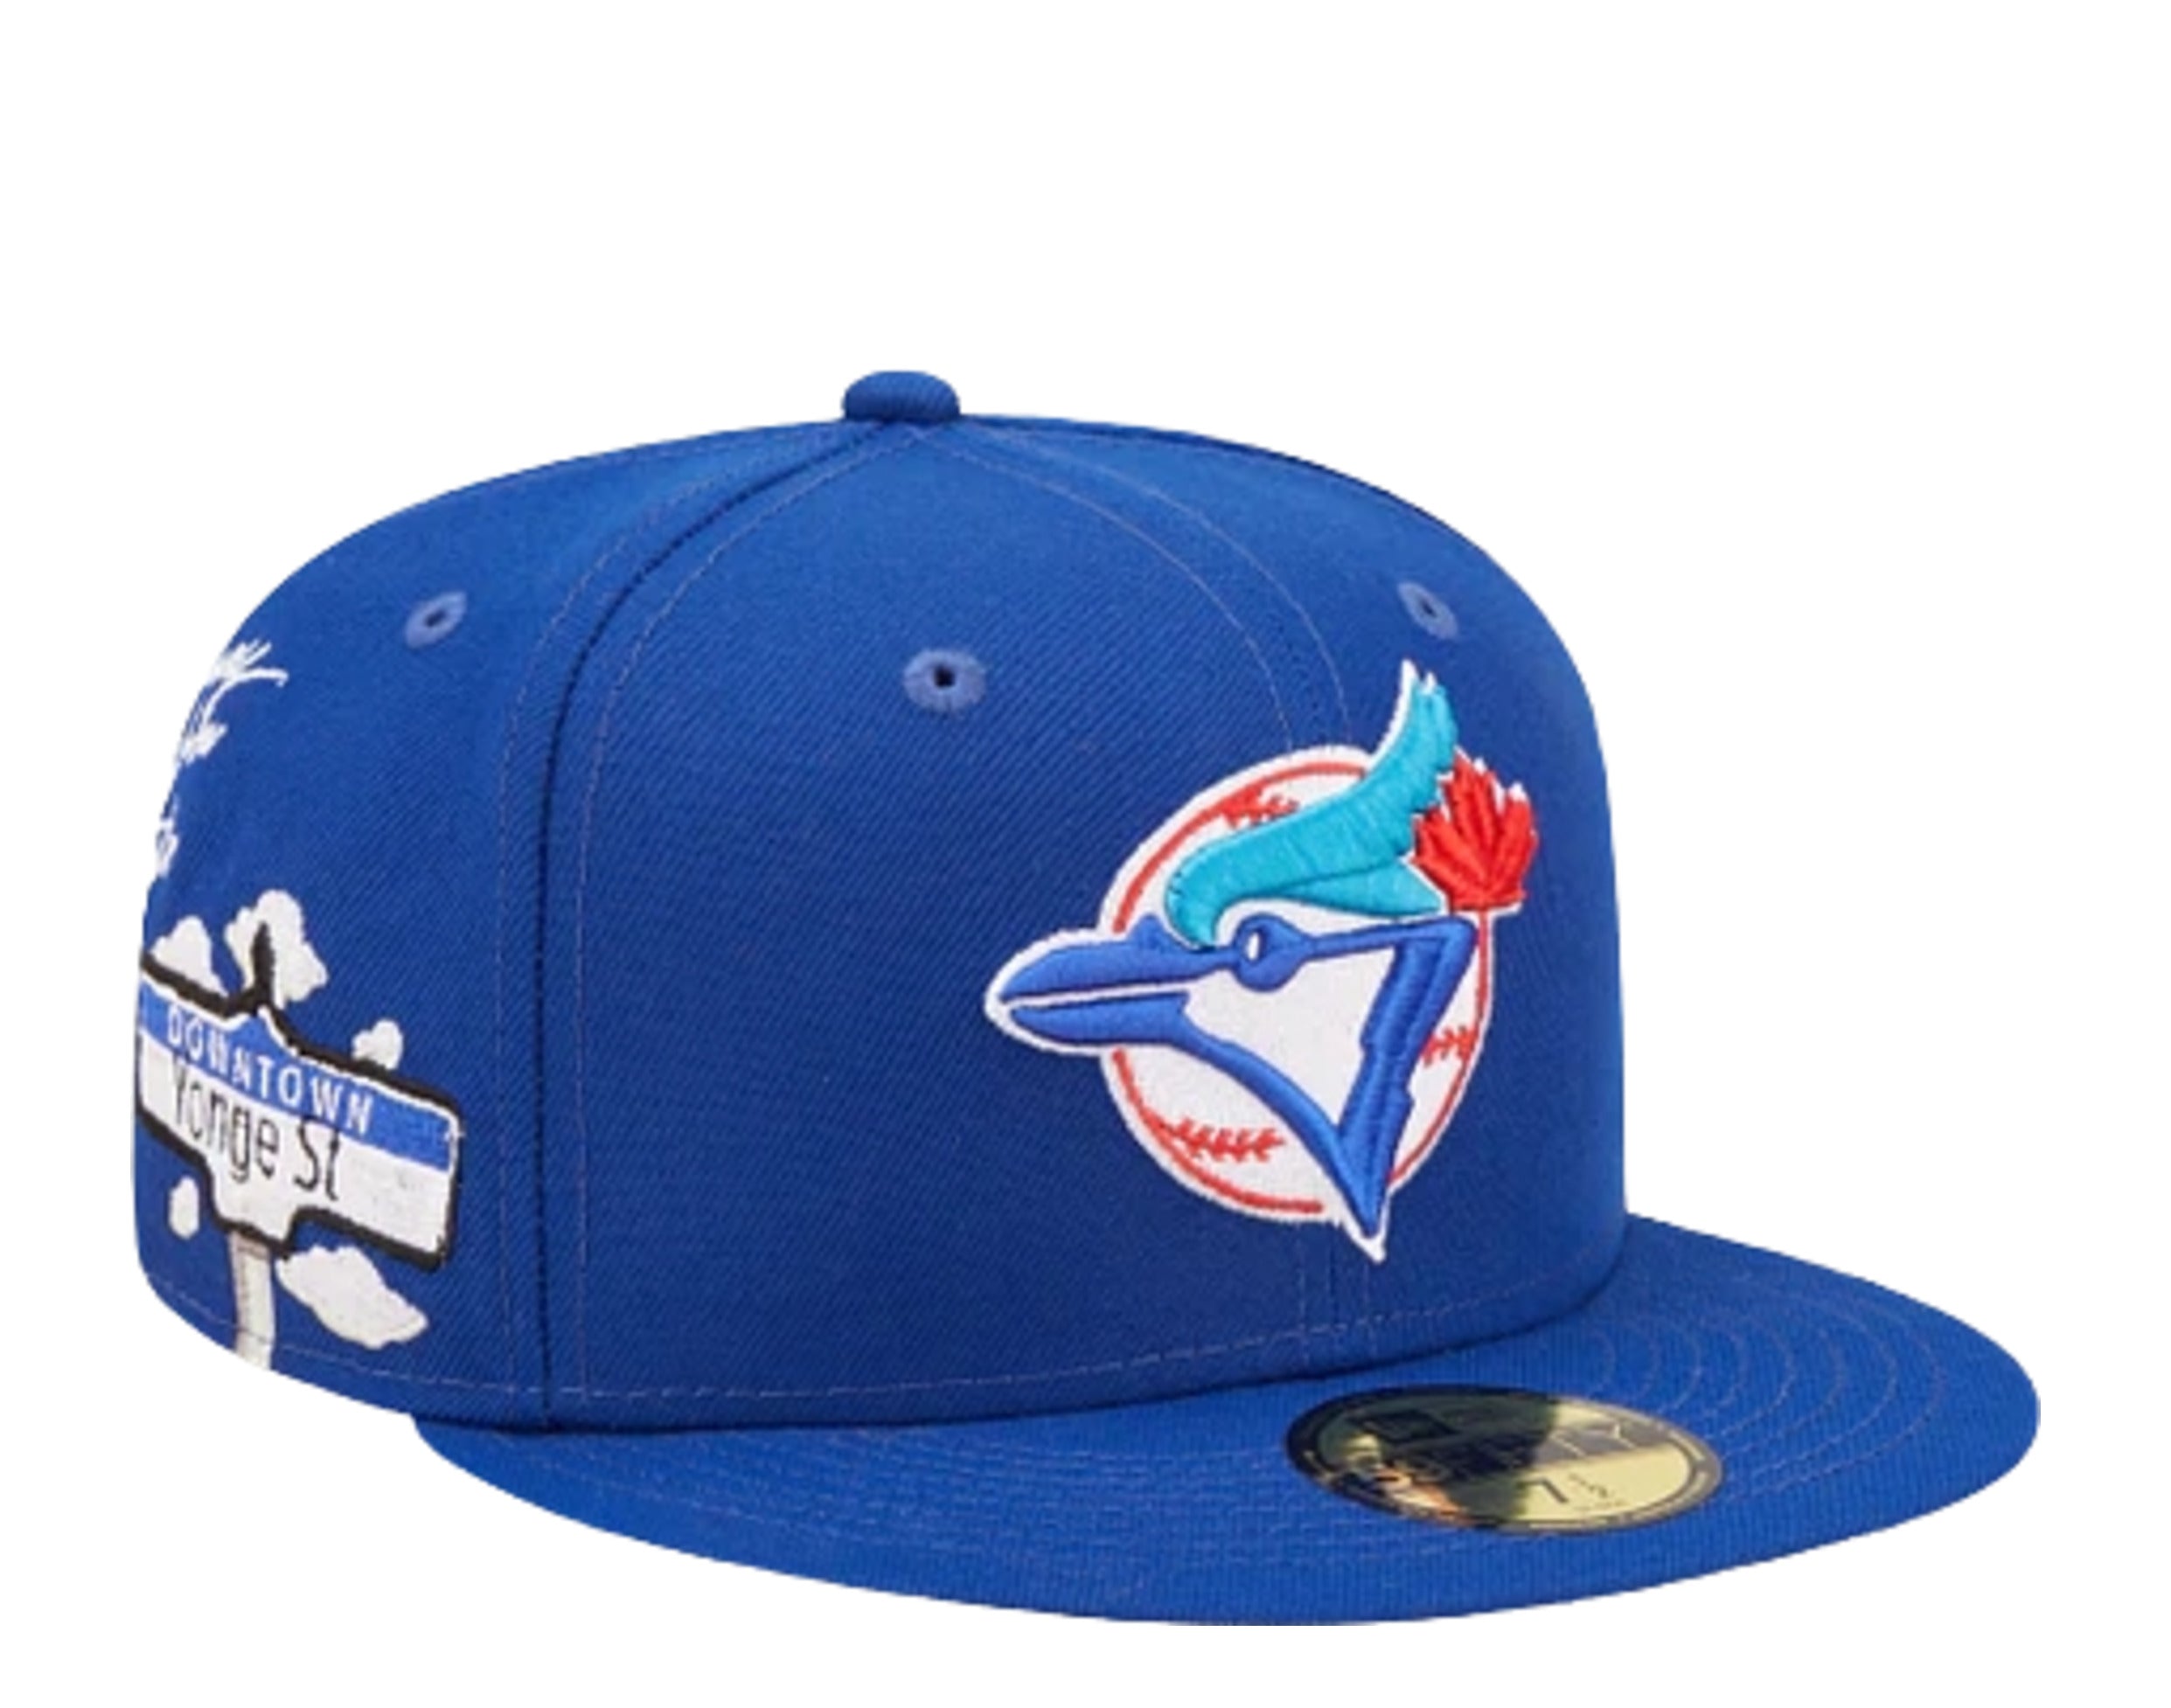 blue jays hat